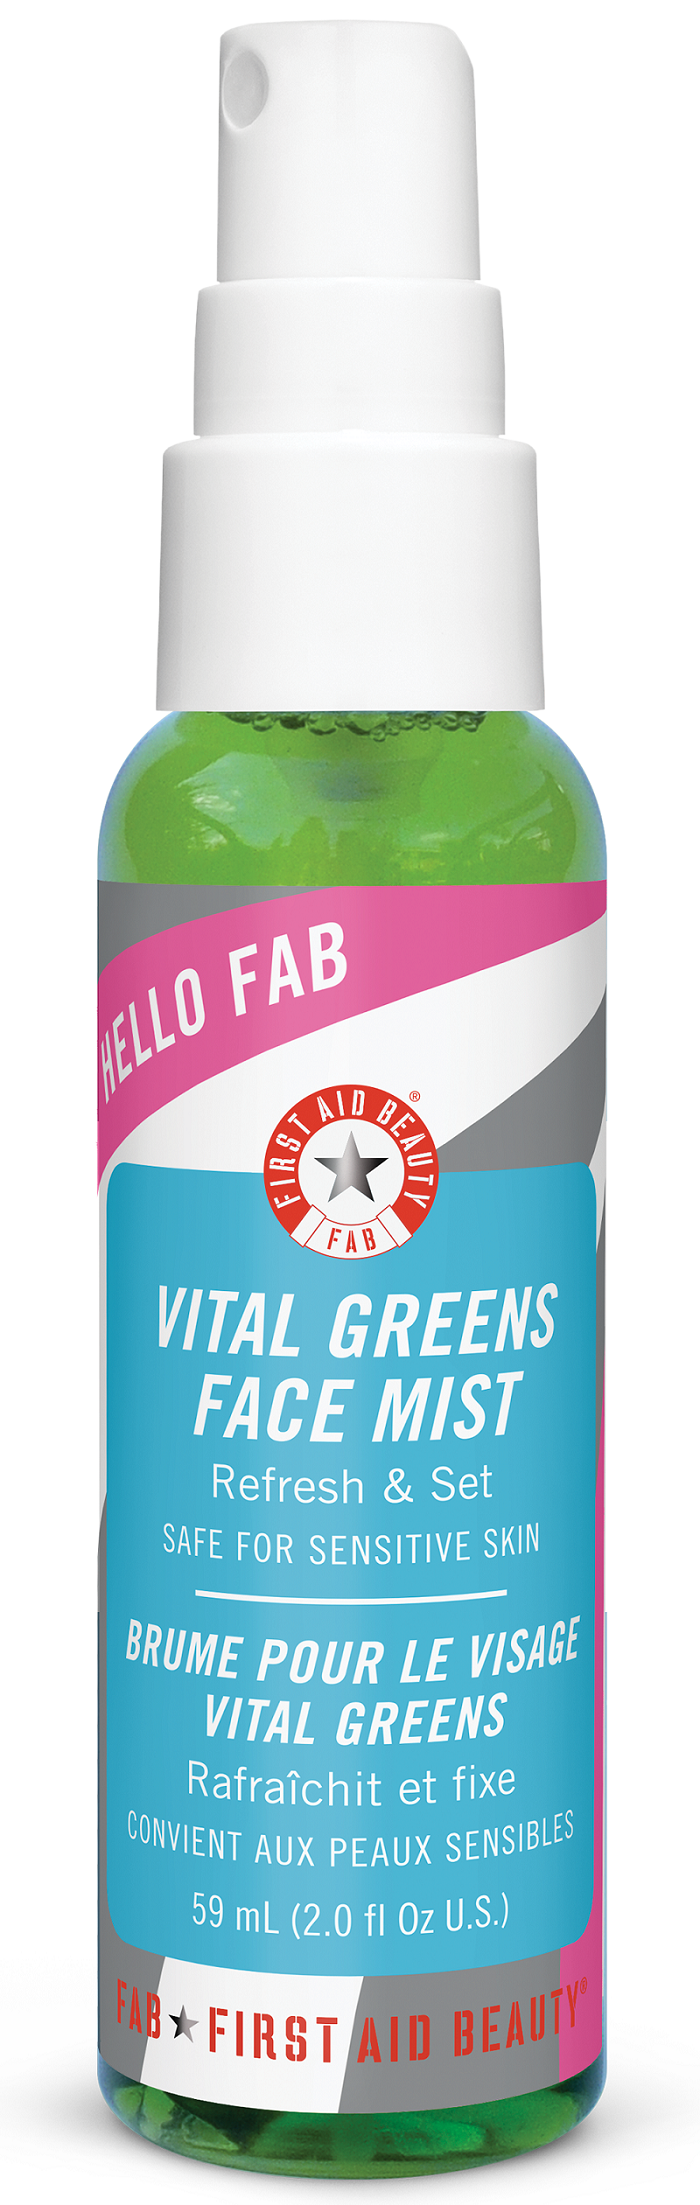 Hello FAB Vital Greens Face Mist-Pamper.my